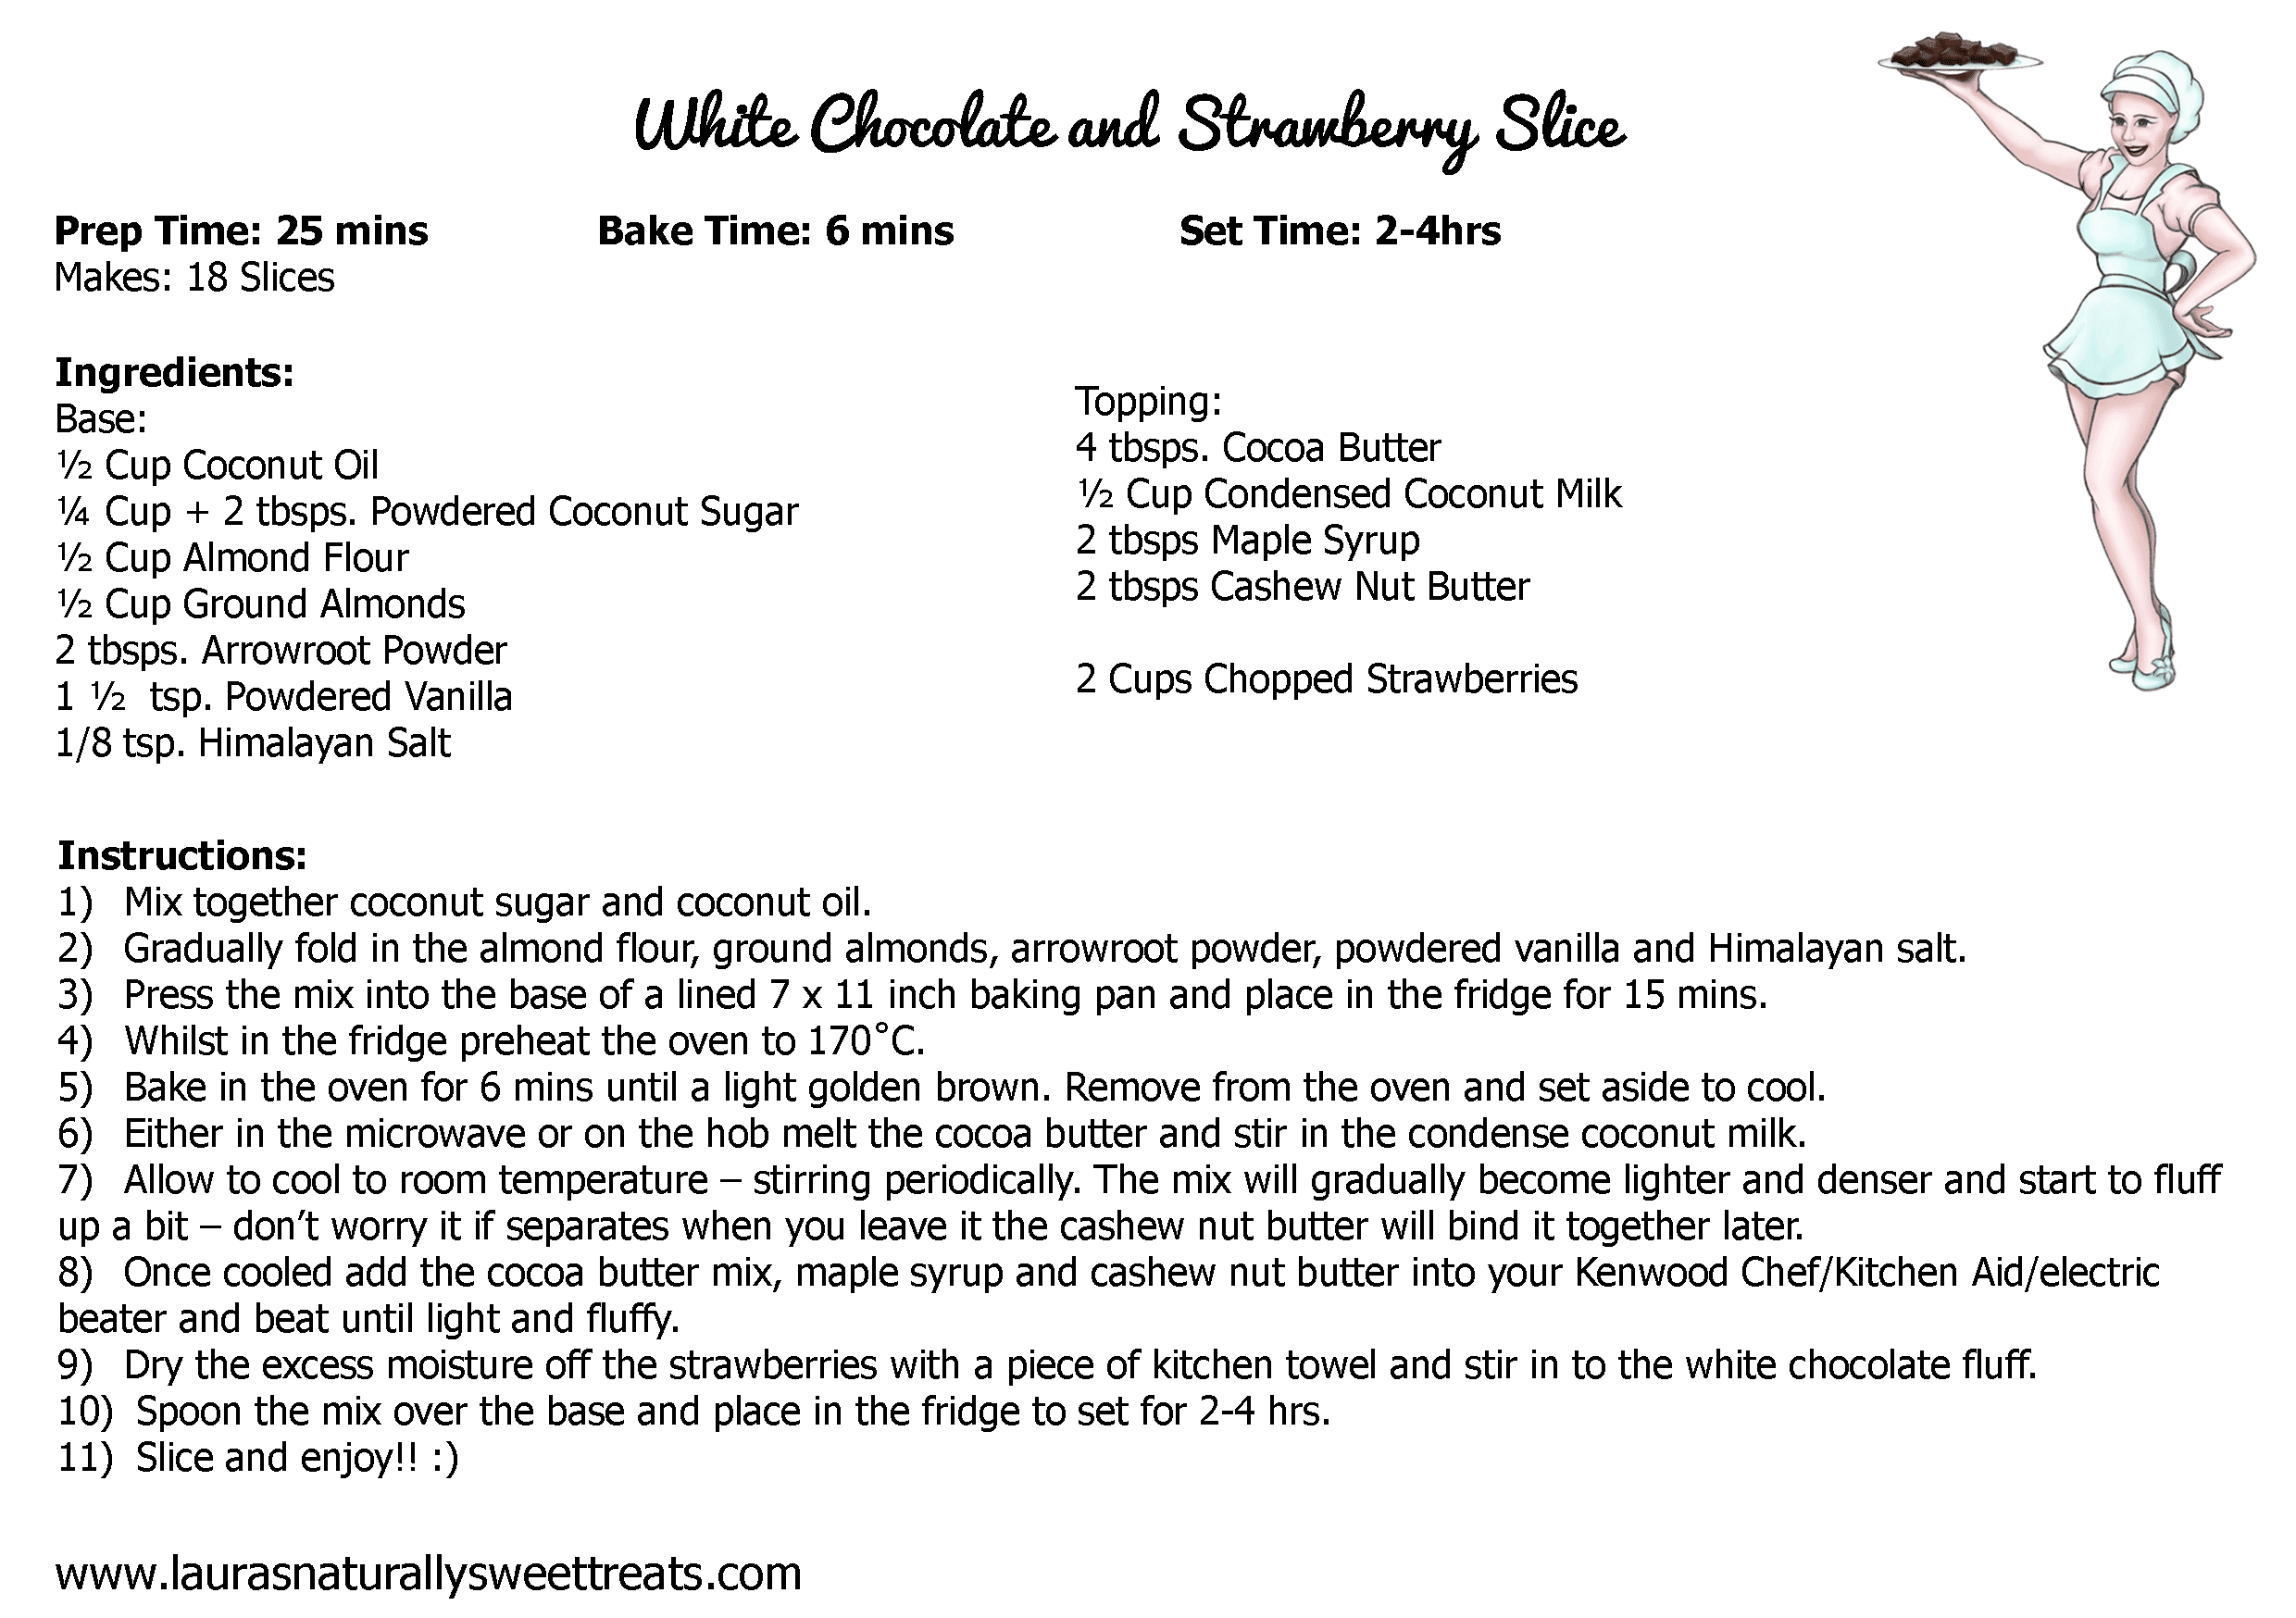 white chocolate and strawberry slice recipe card